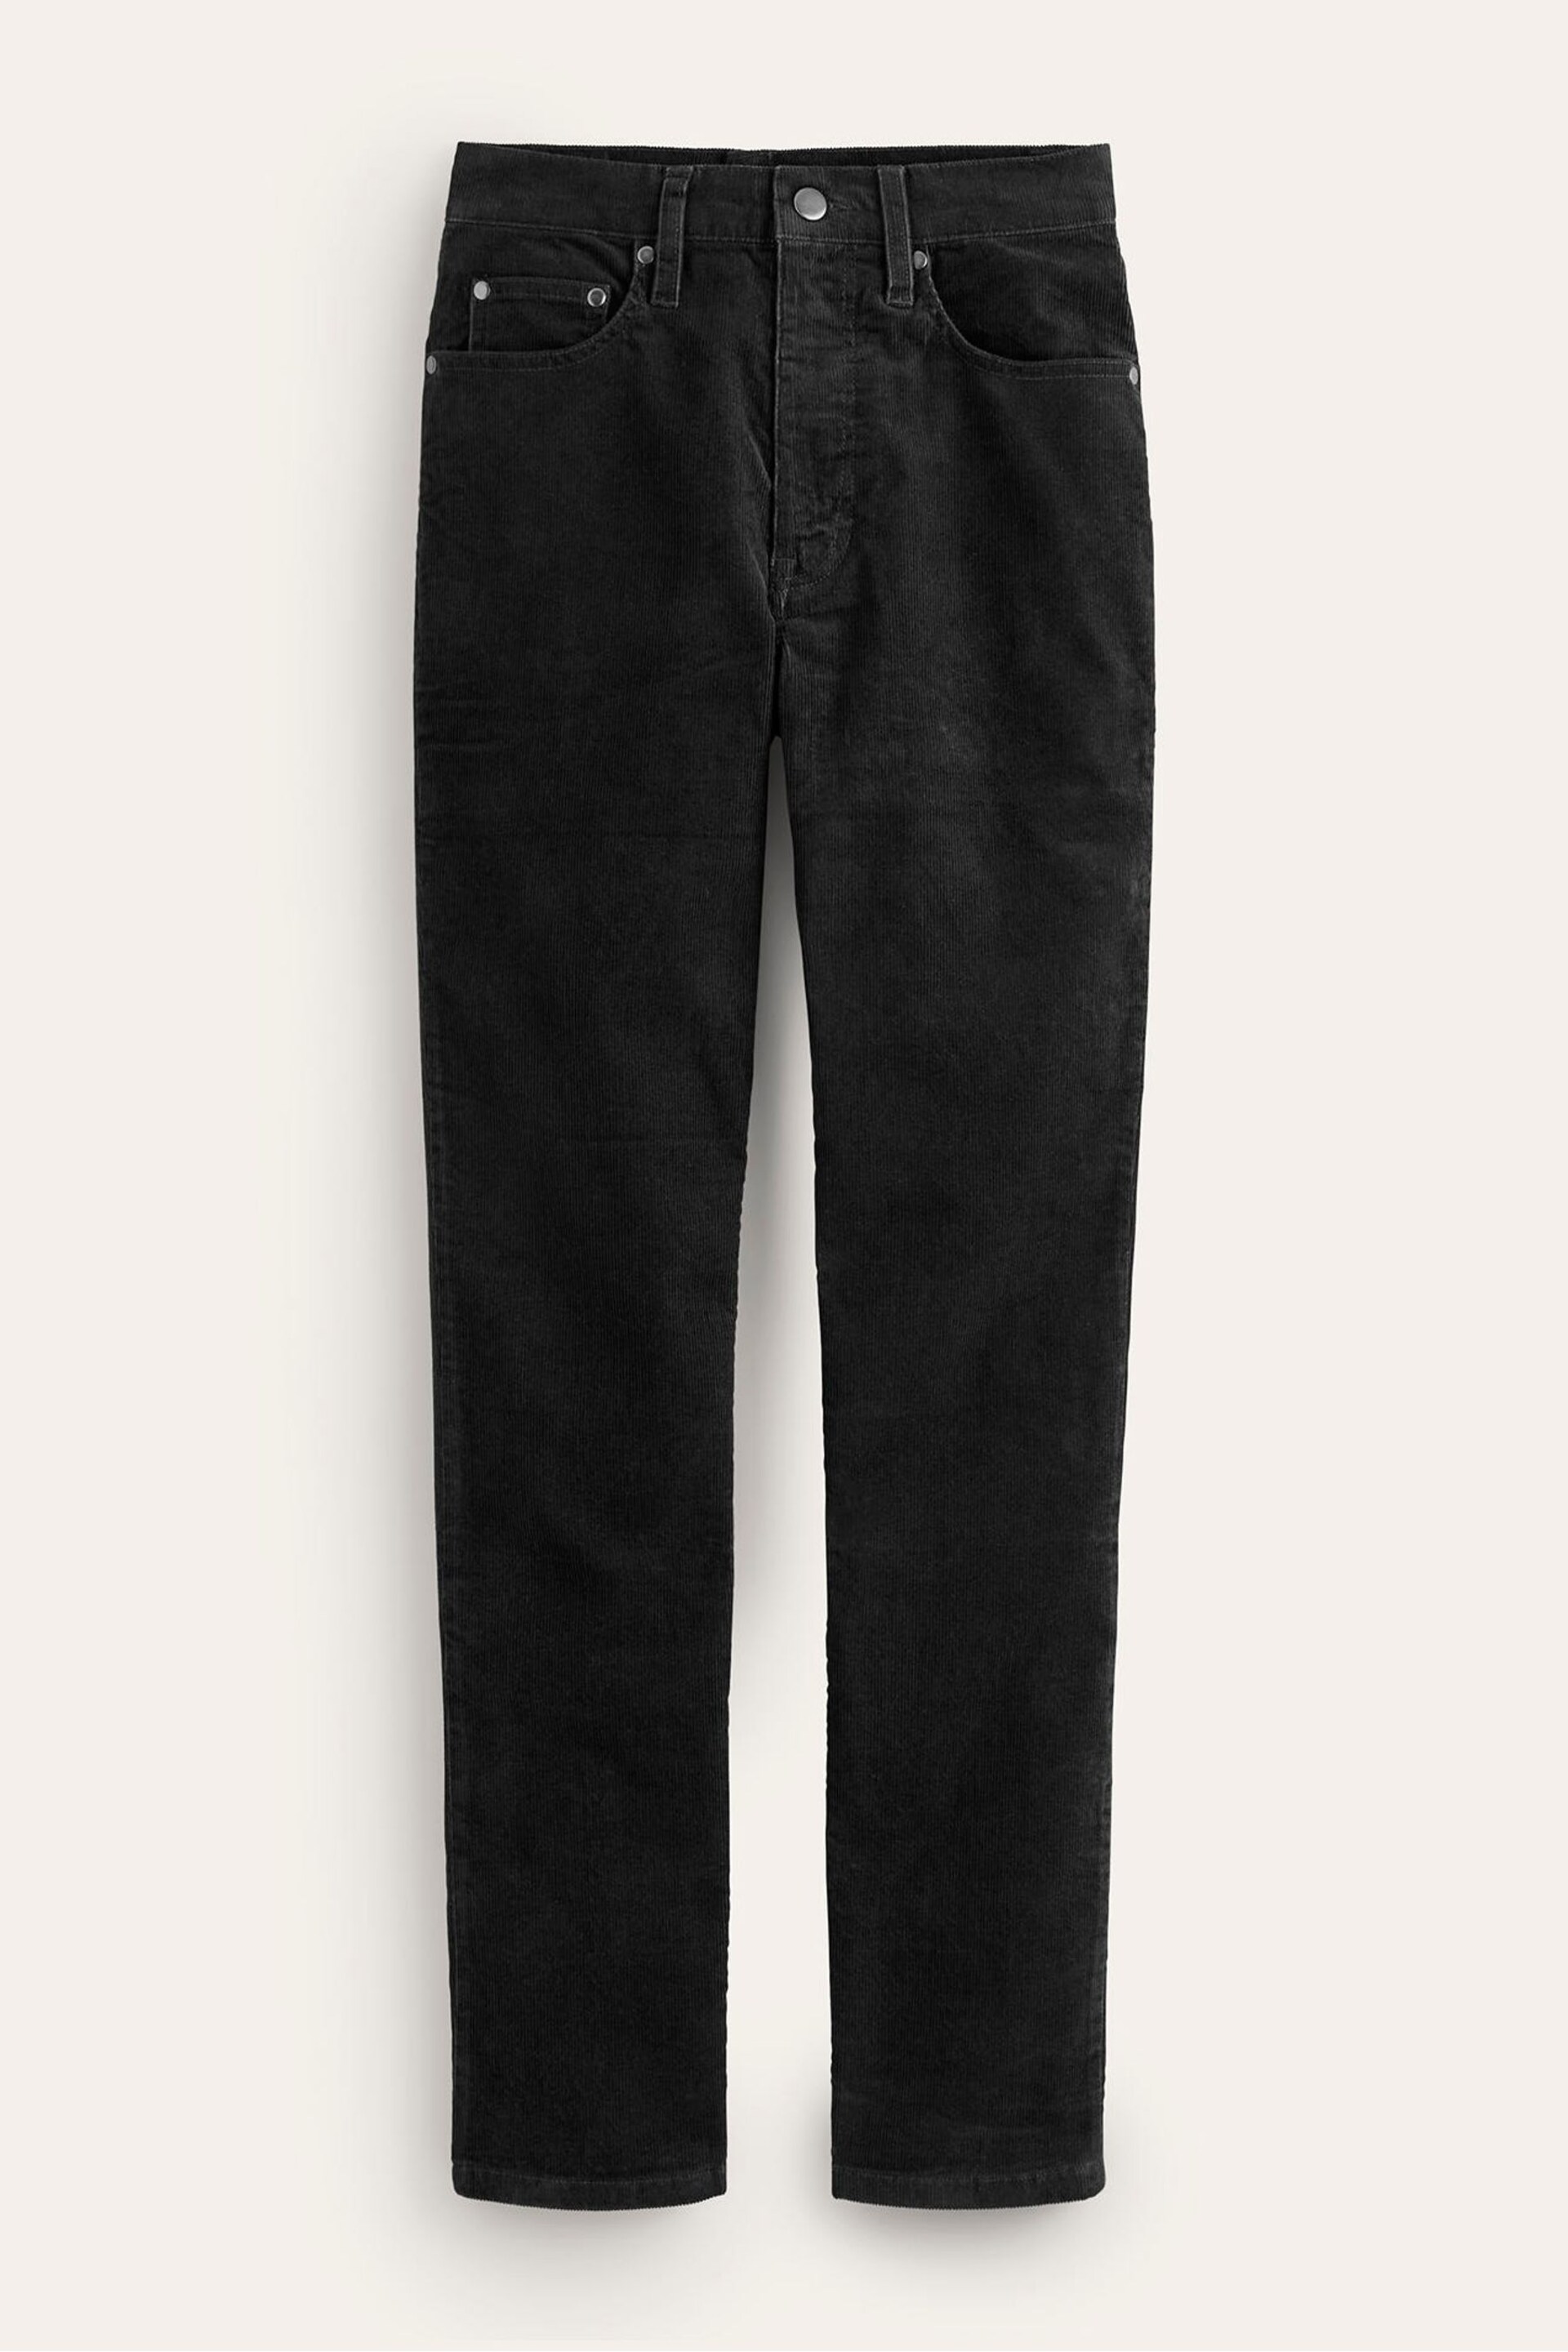 Boden Black Slim Corduroy Straight Jeans - Image 7 of 7